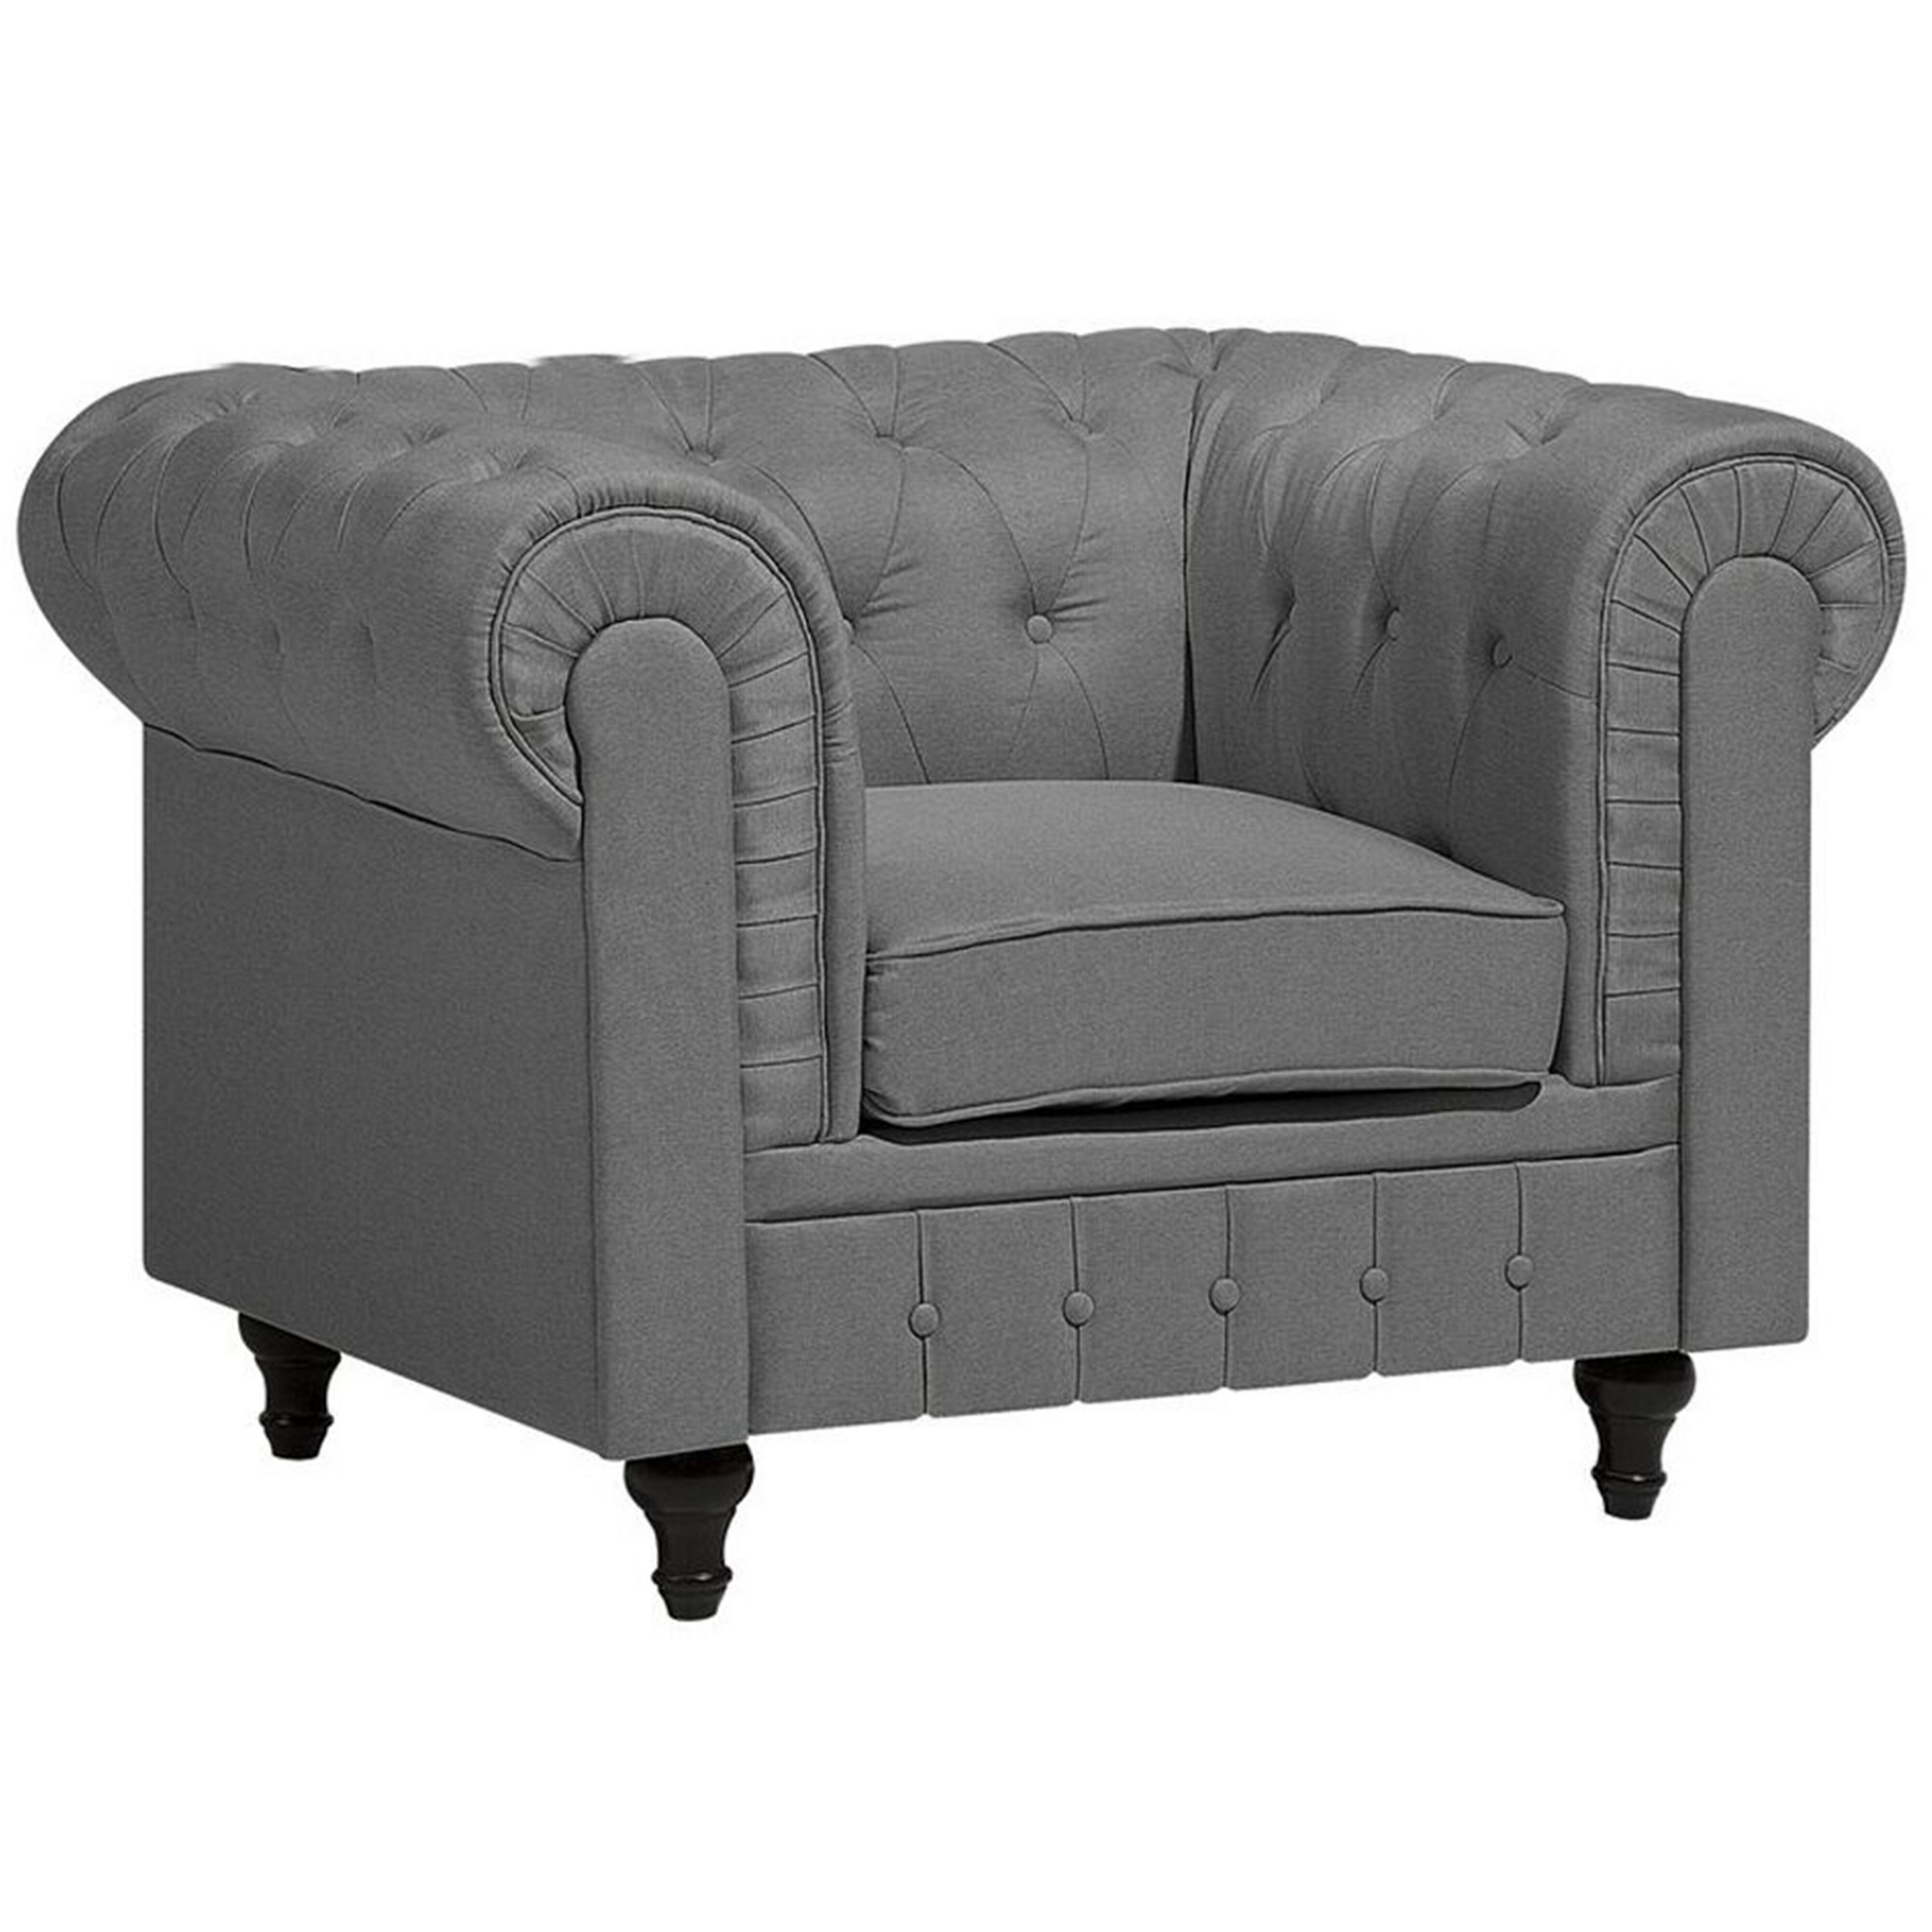 Beliani Chesterfield Armchair Light Grey Fabric Upholstery Dark Wood Legs Contemporary